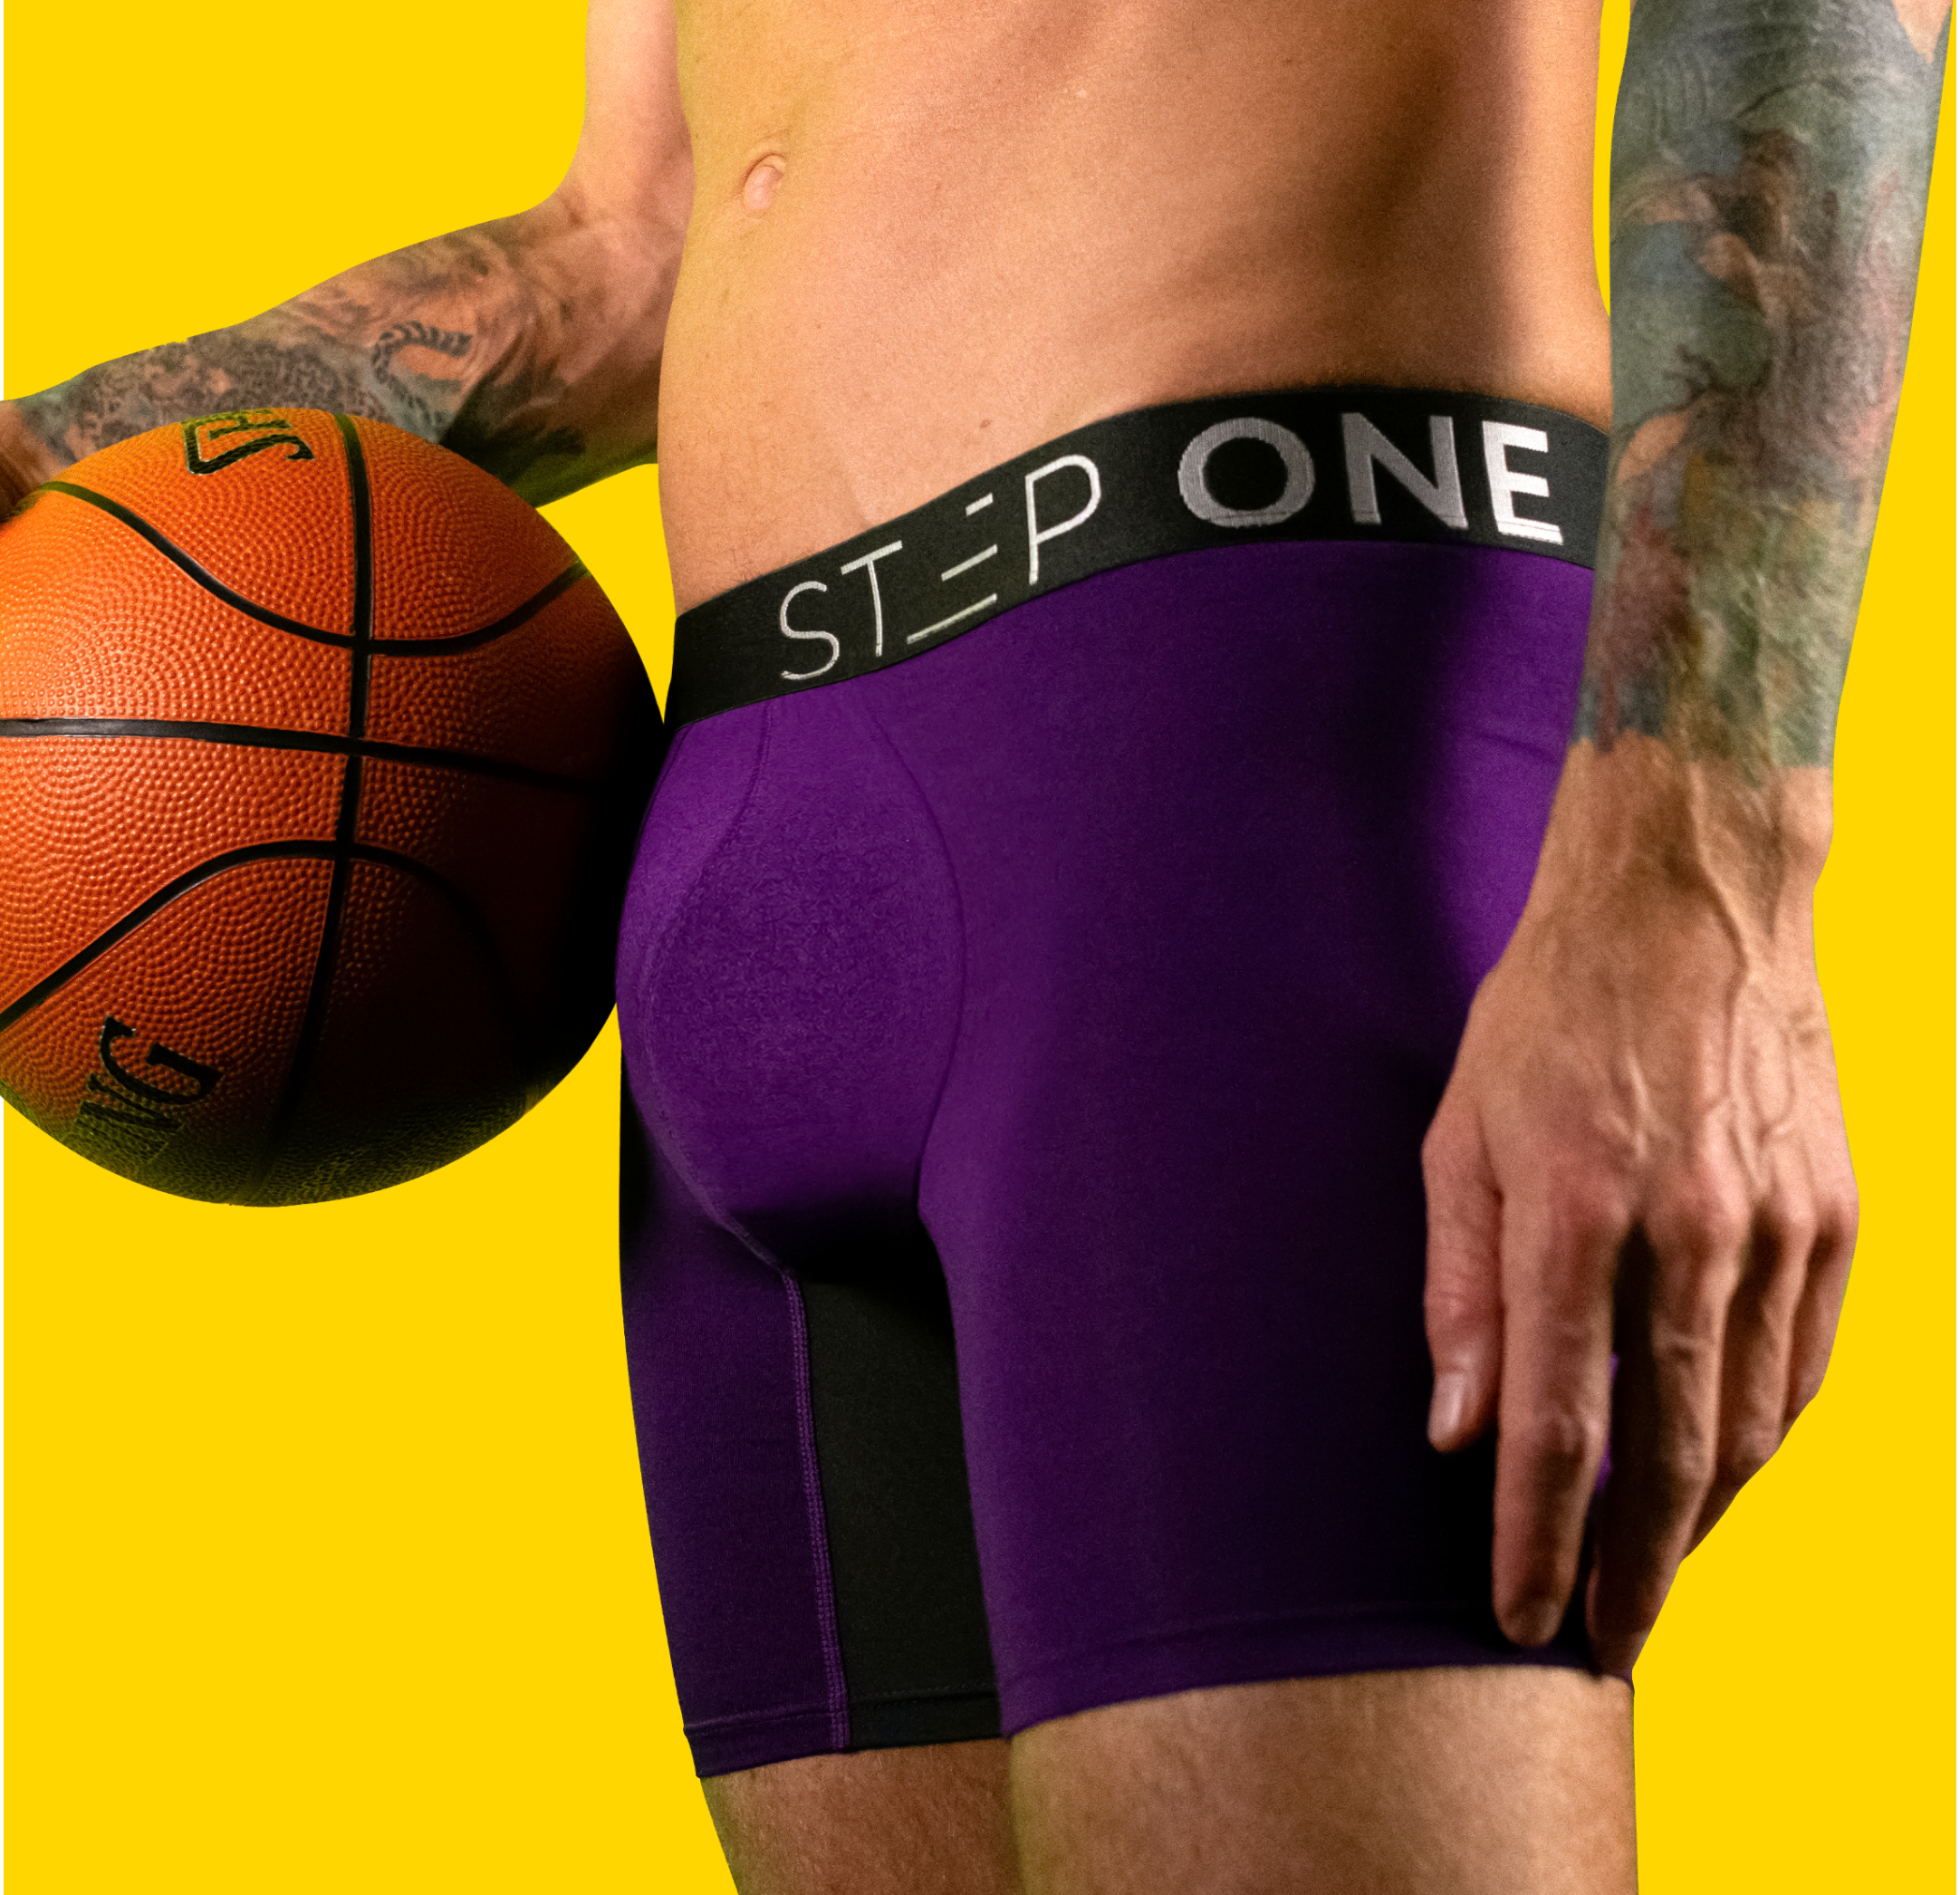 Step One Underwear Australia - Search Shopping